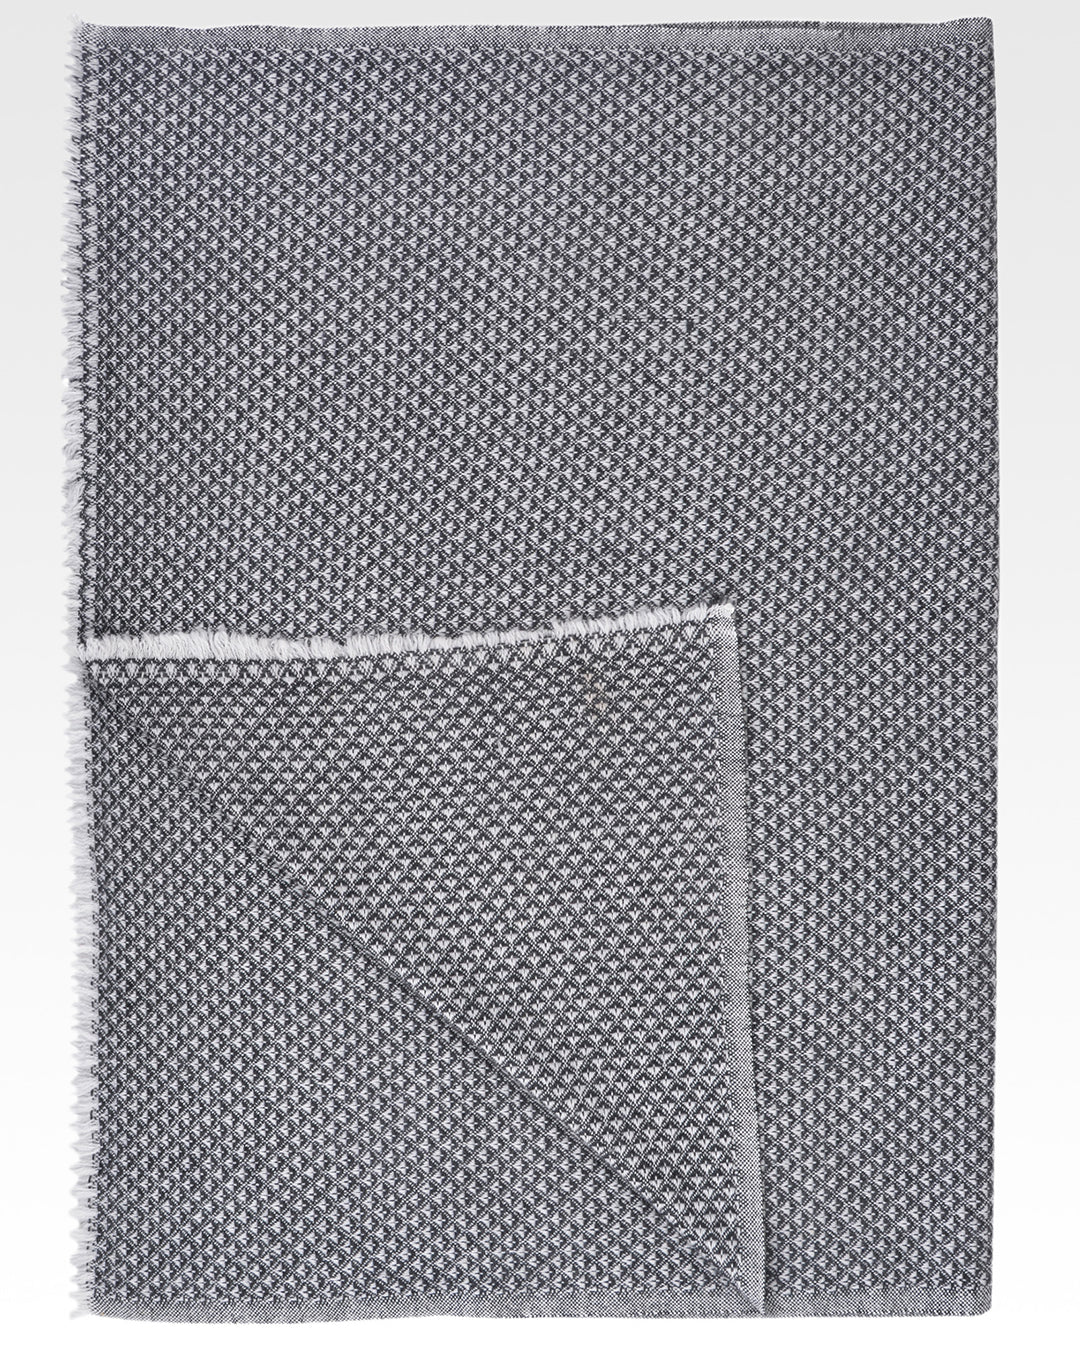 Soft Cashmere Wool Scarf - Black and White Diamond Pattern